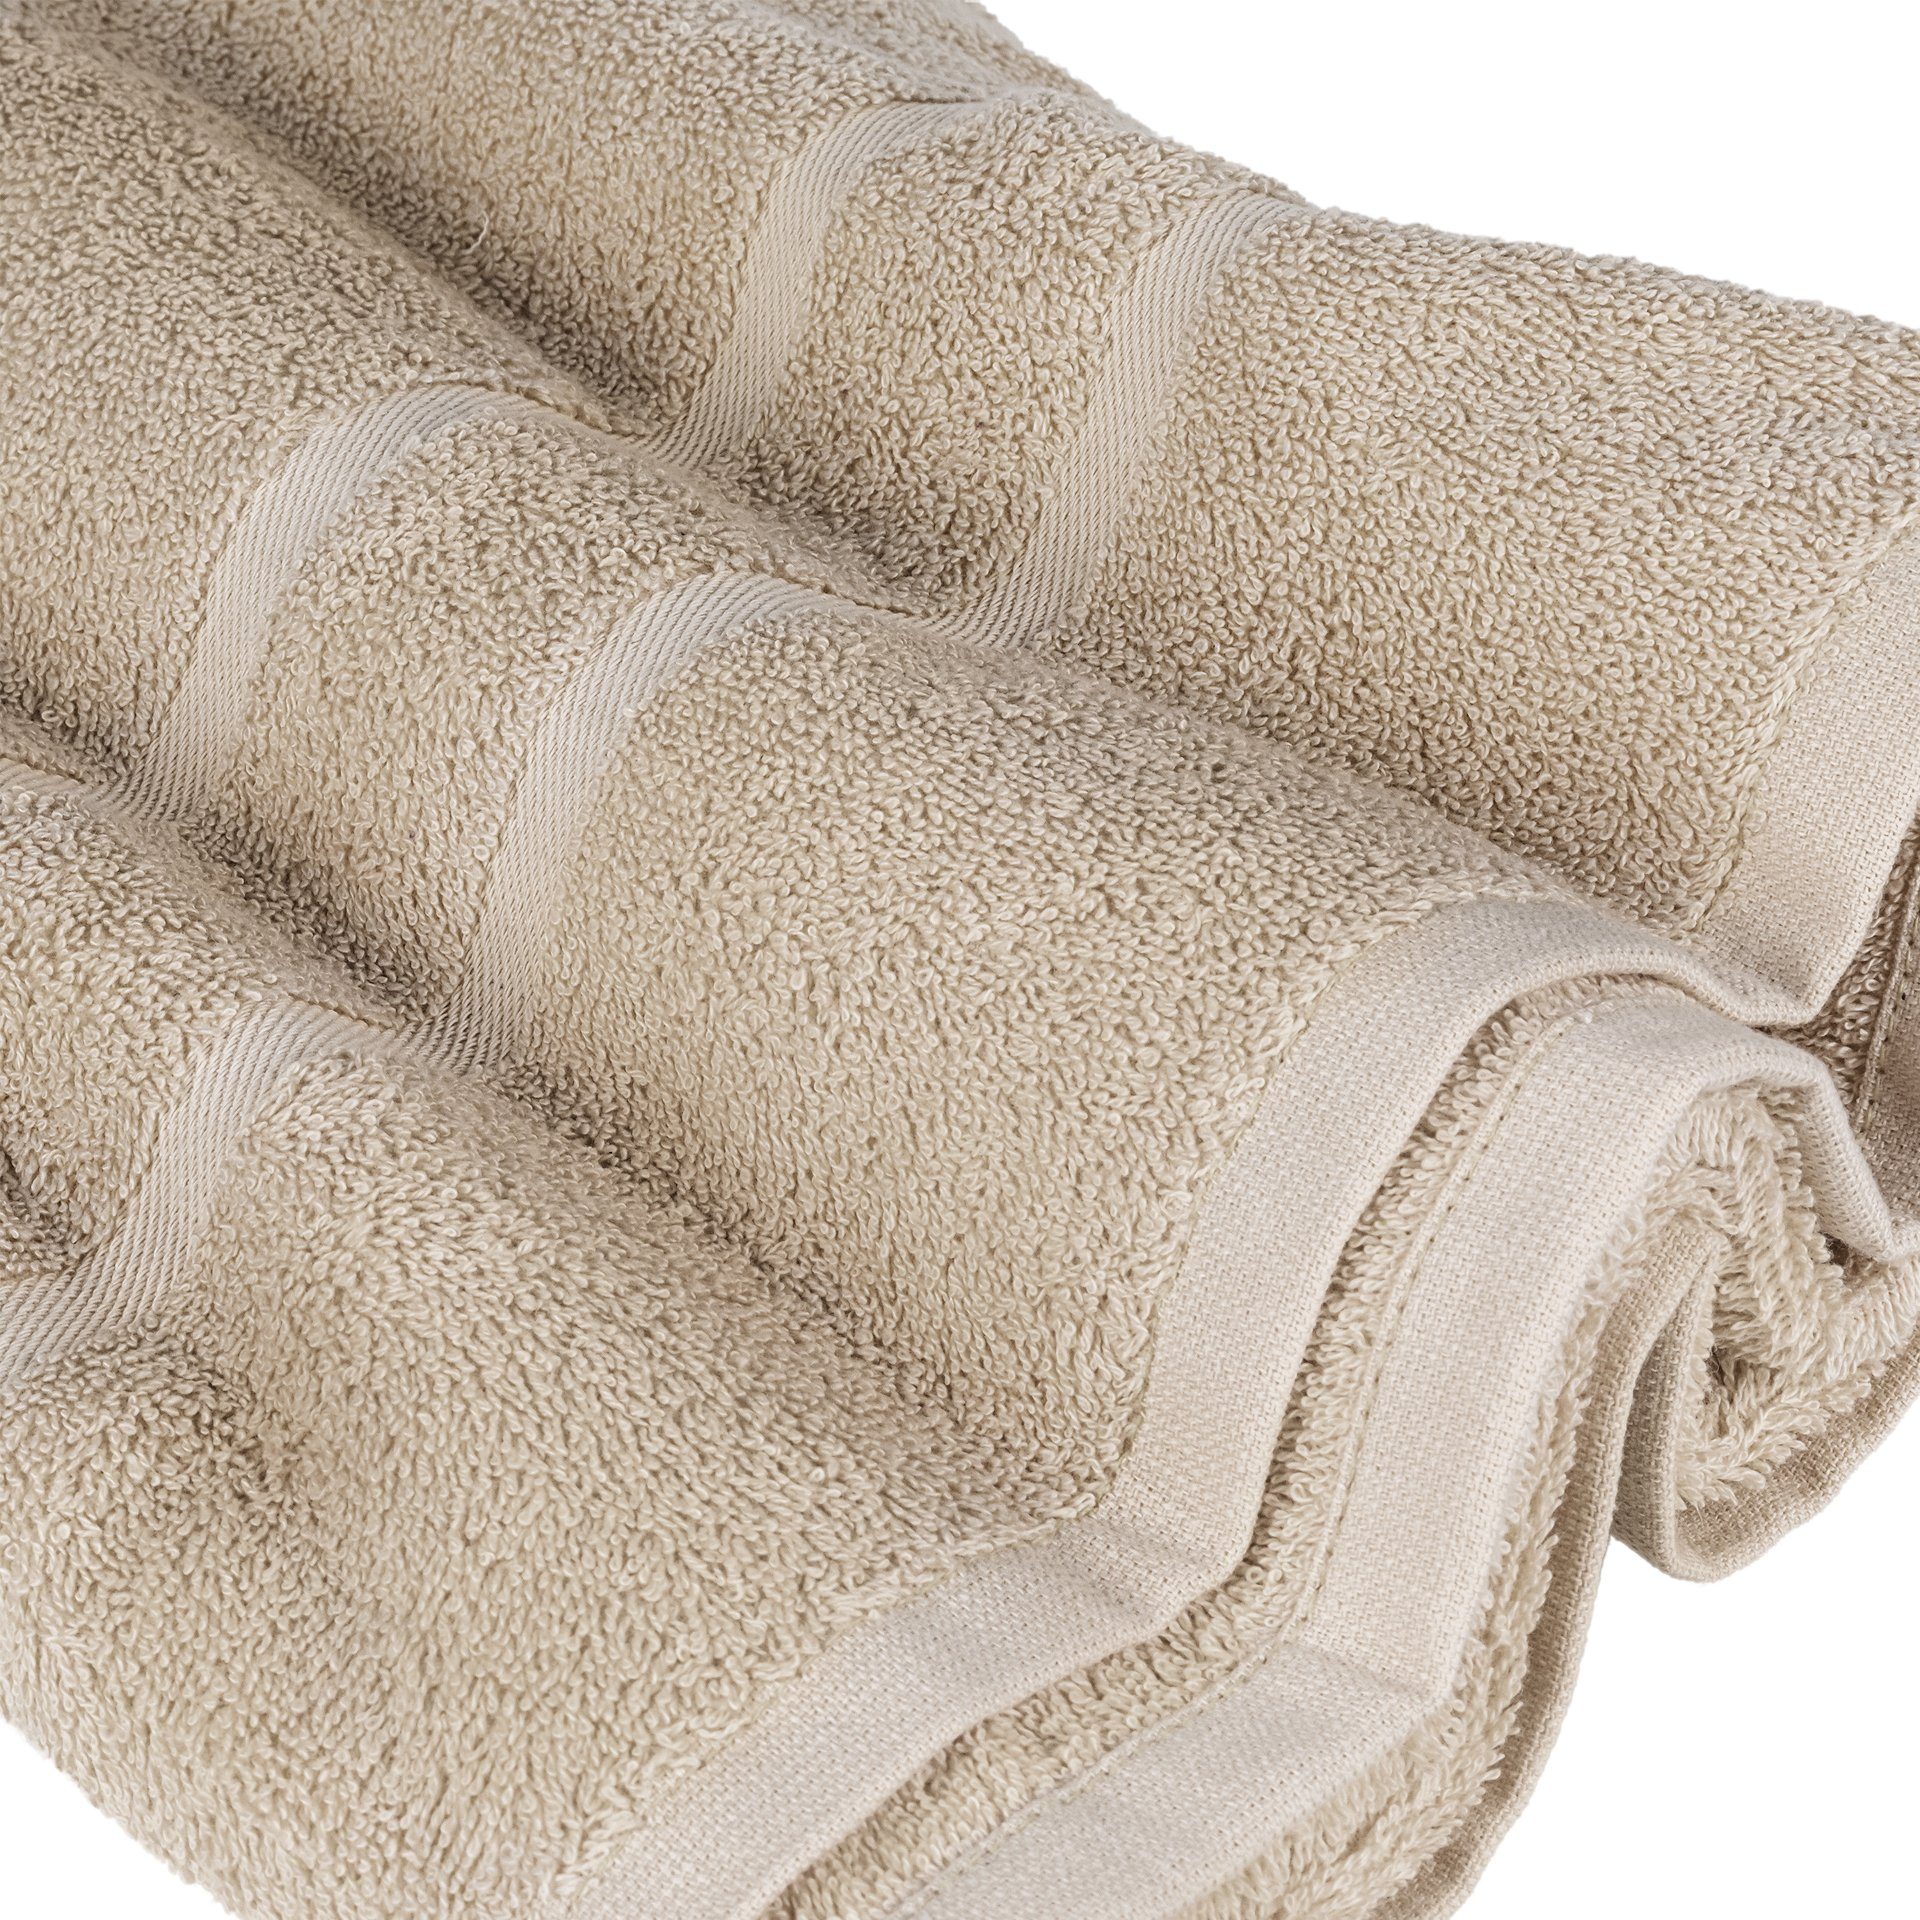 StickandShine Handtuch Wahl Saunatücher Duschtücher in Badetücher Baumwolle Gästehandtücher 500 Sand GSM zur 100% Handtücher